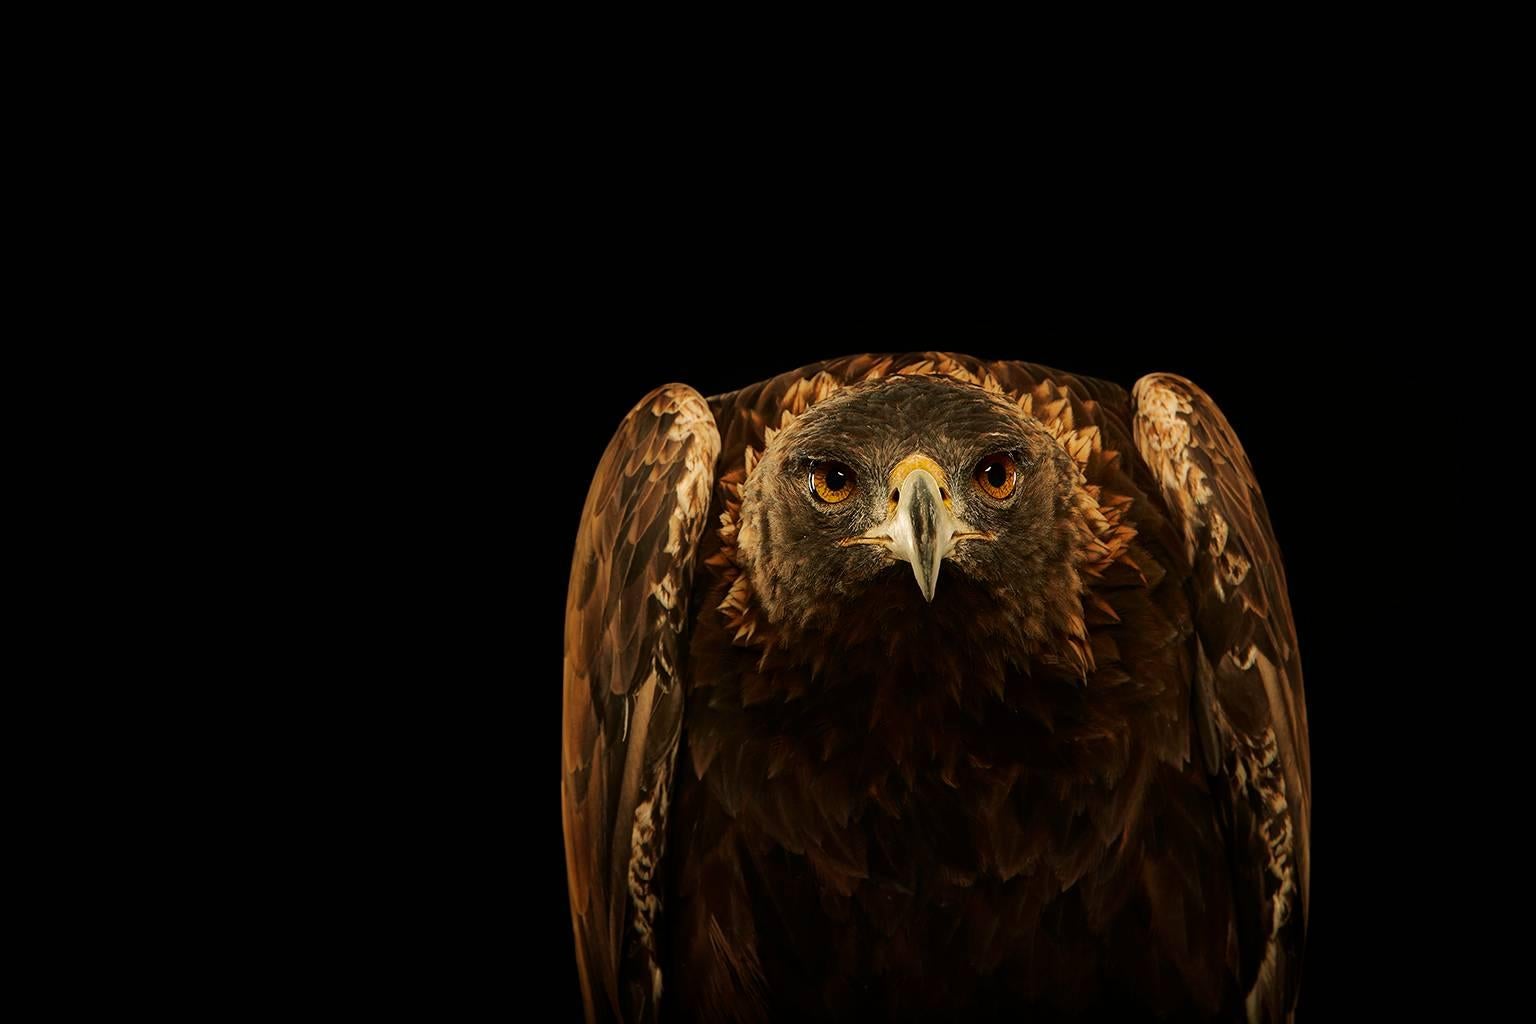 Chris Gordaneer Portrait Photograph - Birds of Prey - Golden Eagle No. 20